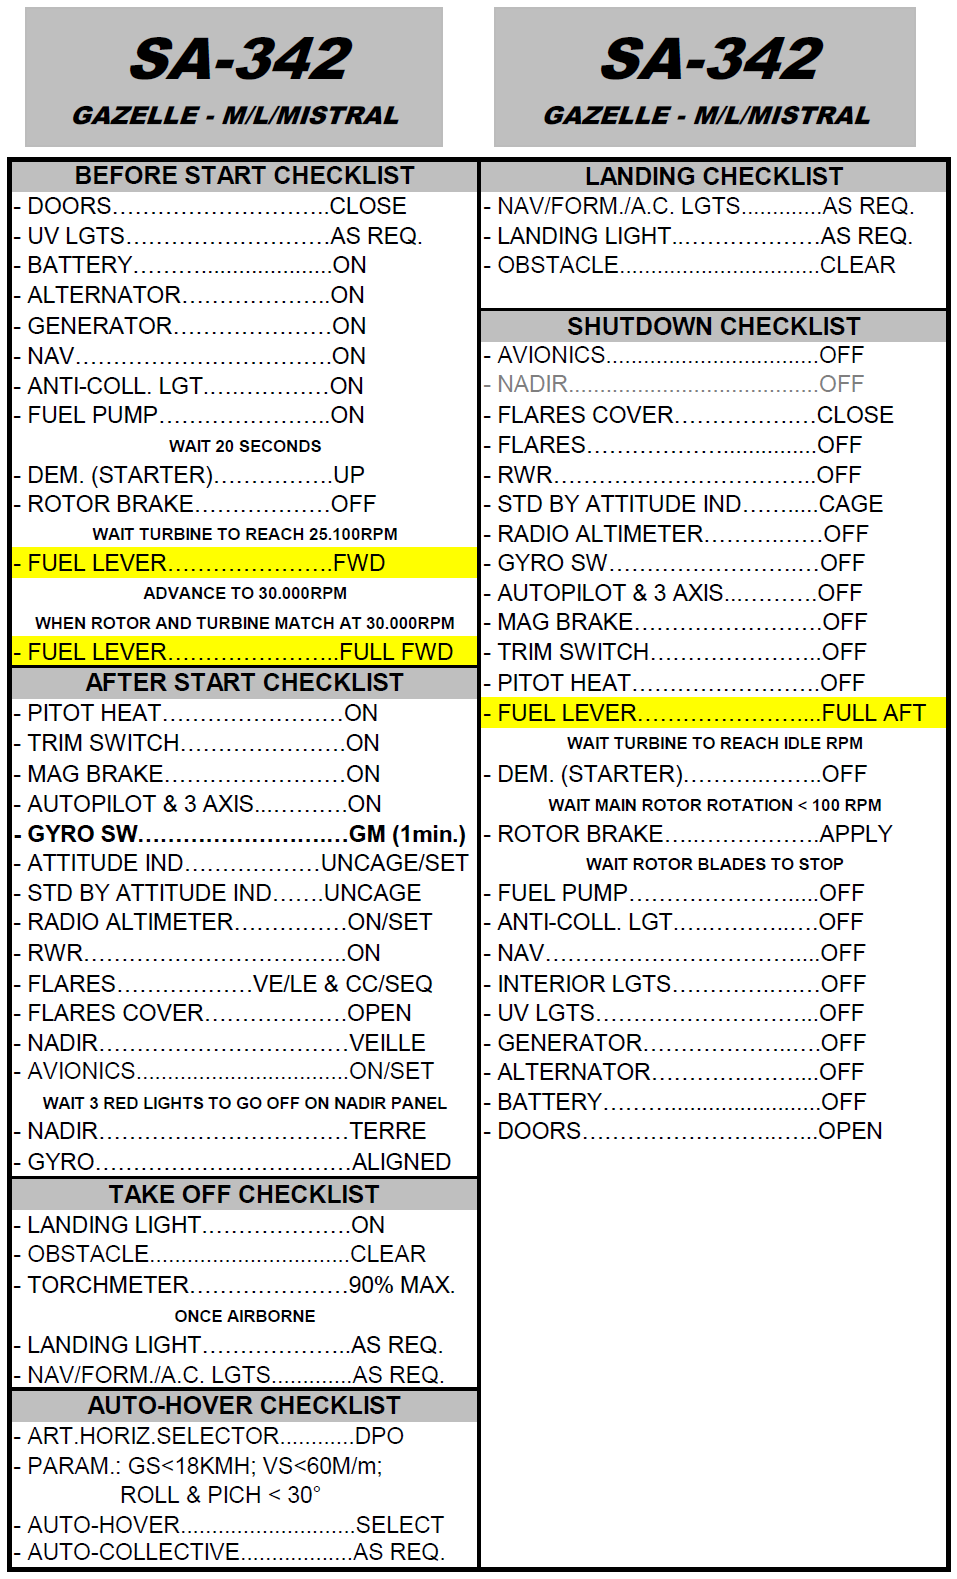 SA-342 Gazelle Quick Checklist and Weapons Checklist(M/L/Mistral/Minigun)